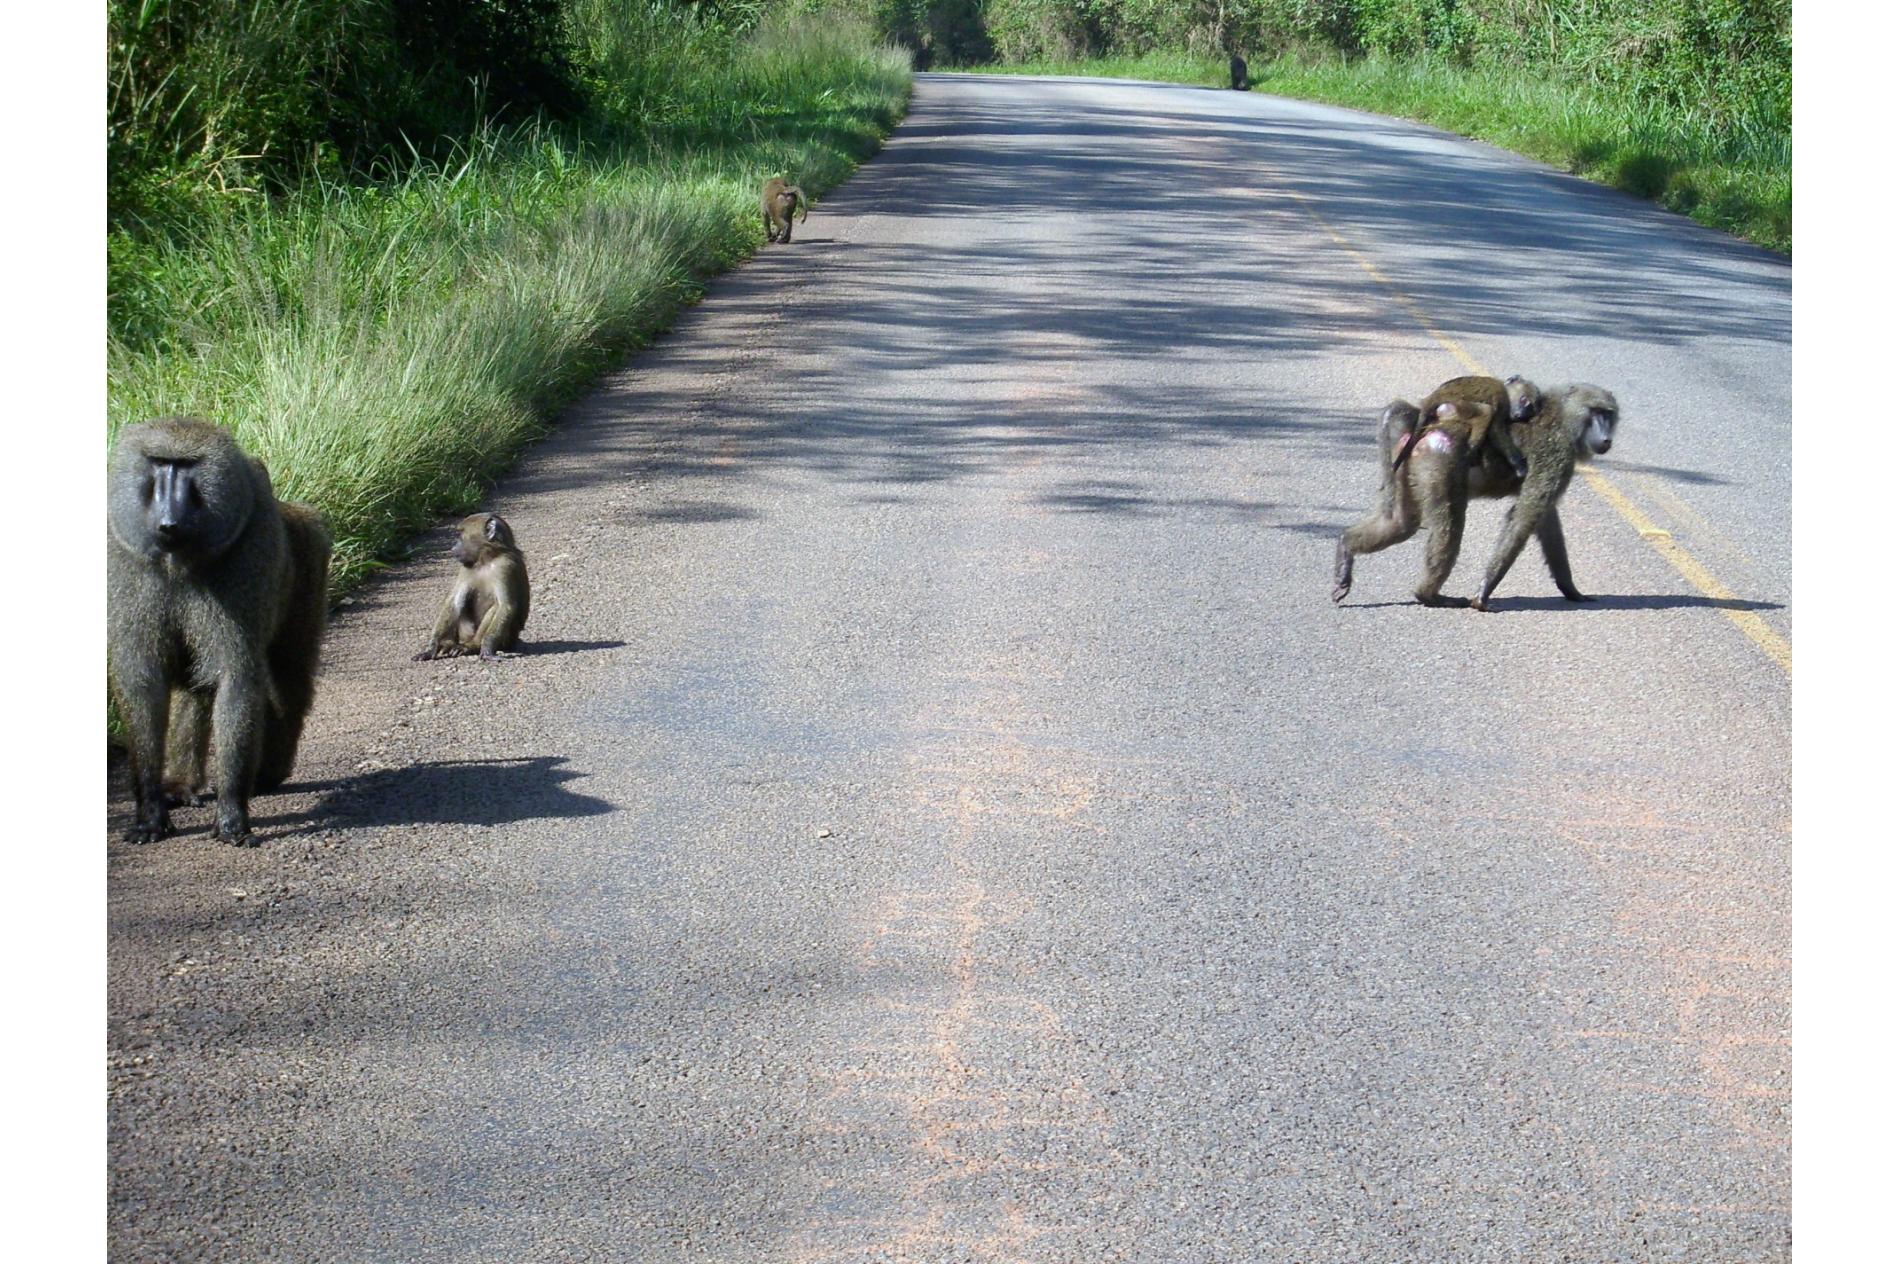 Road near Kibale National Forest